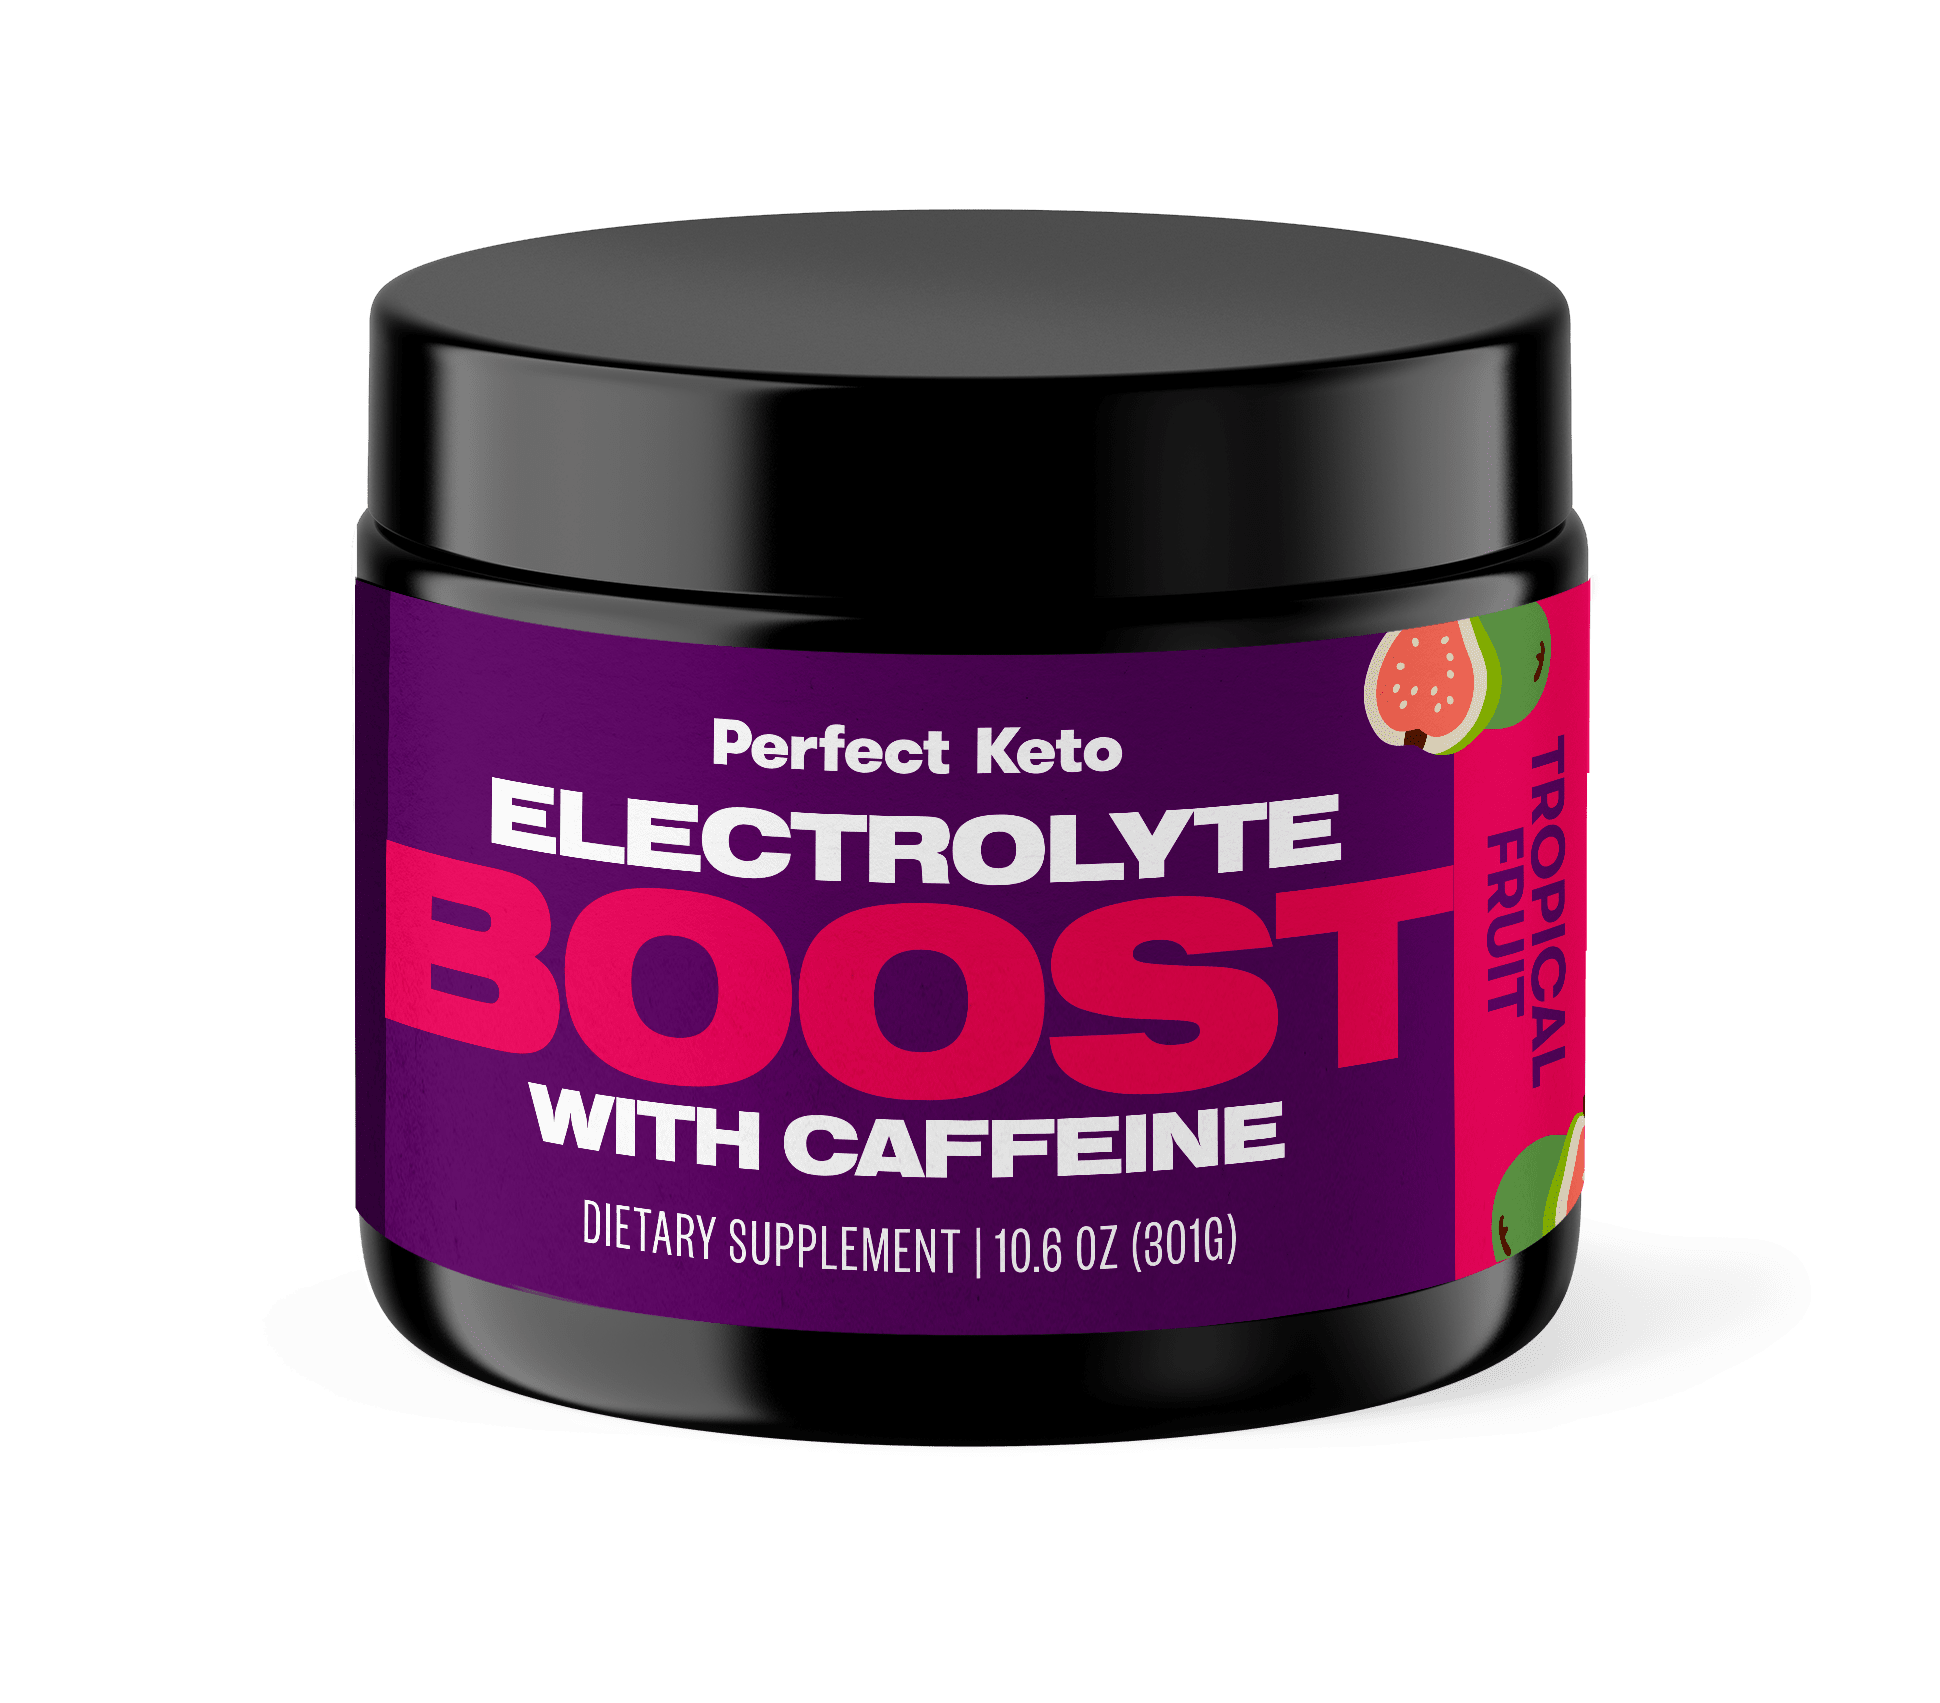 Electrolyte Boost